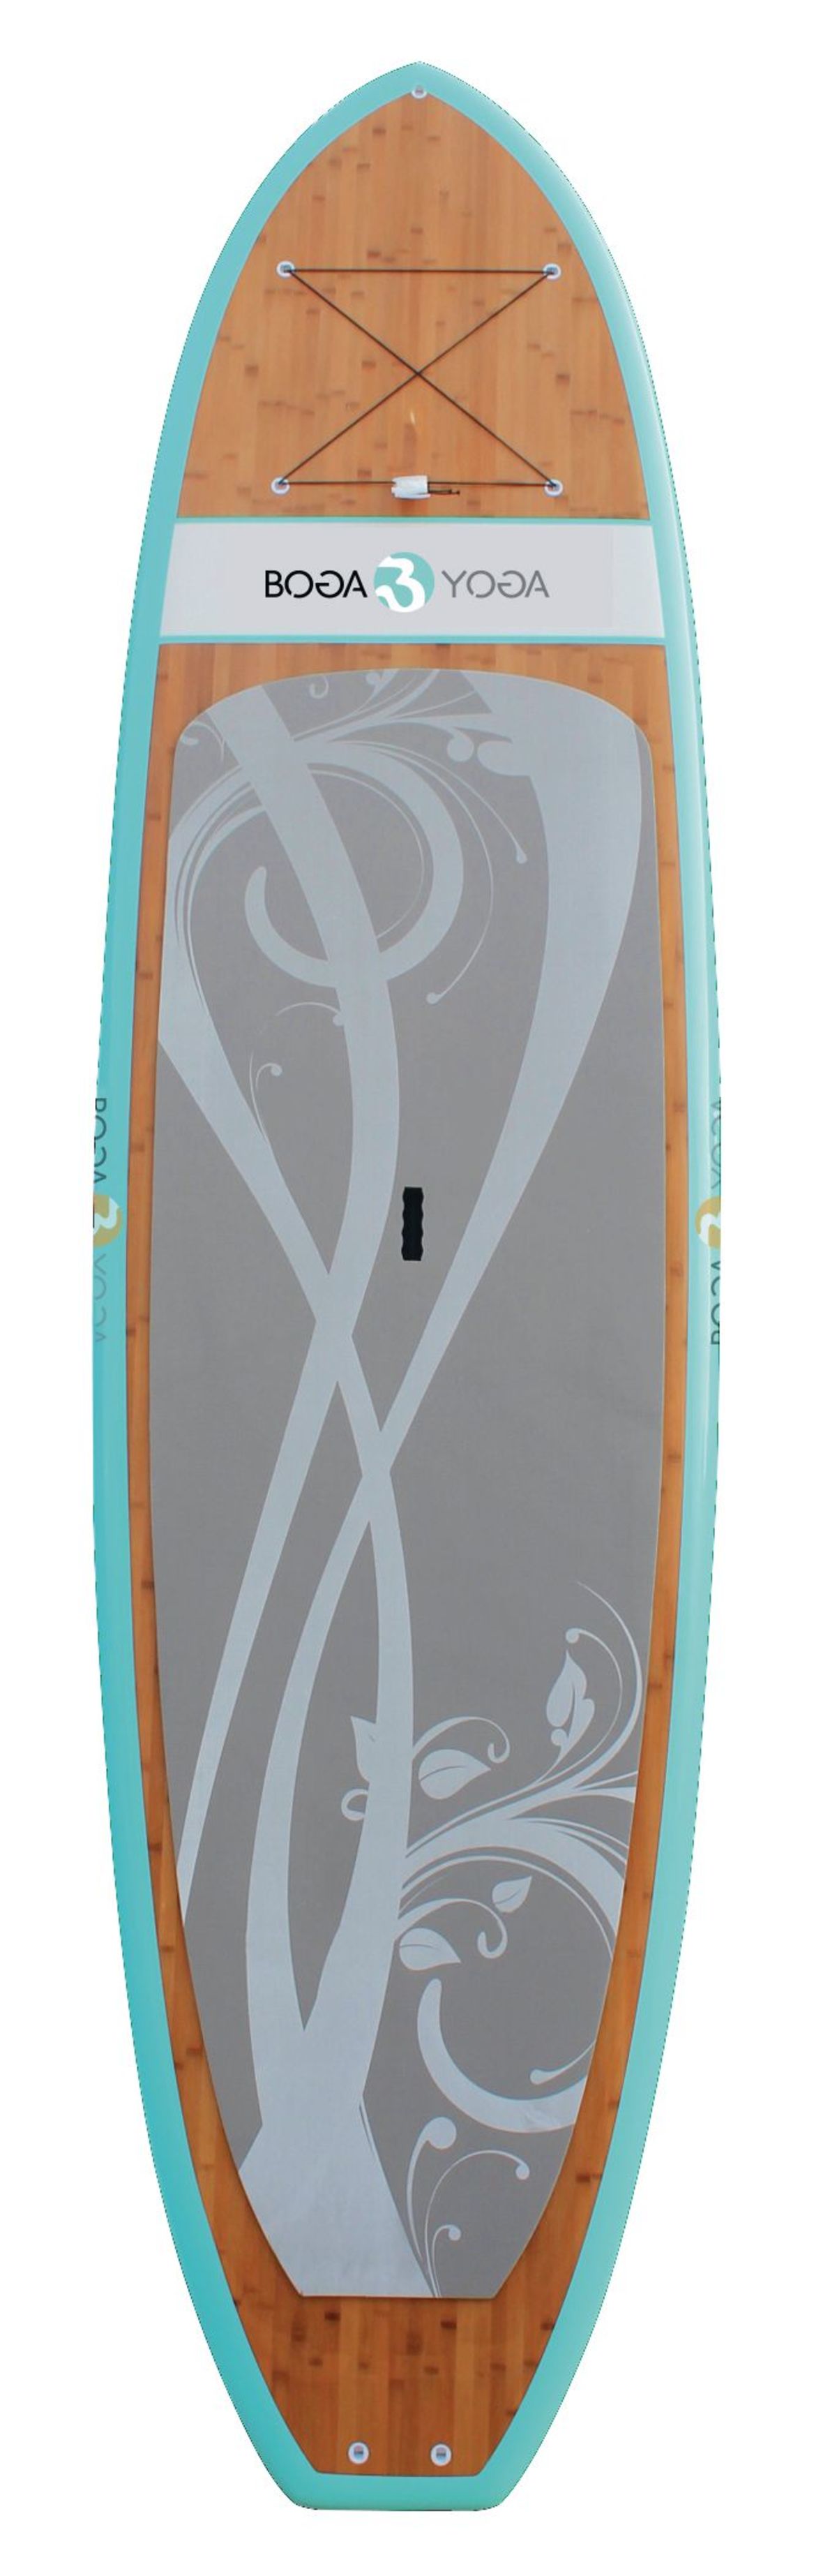 Yoga-SUP-Paddle Board